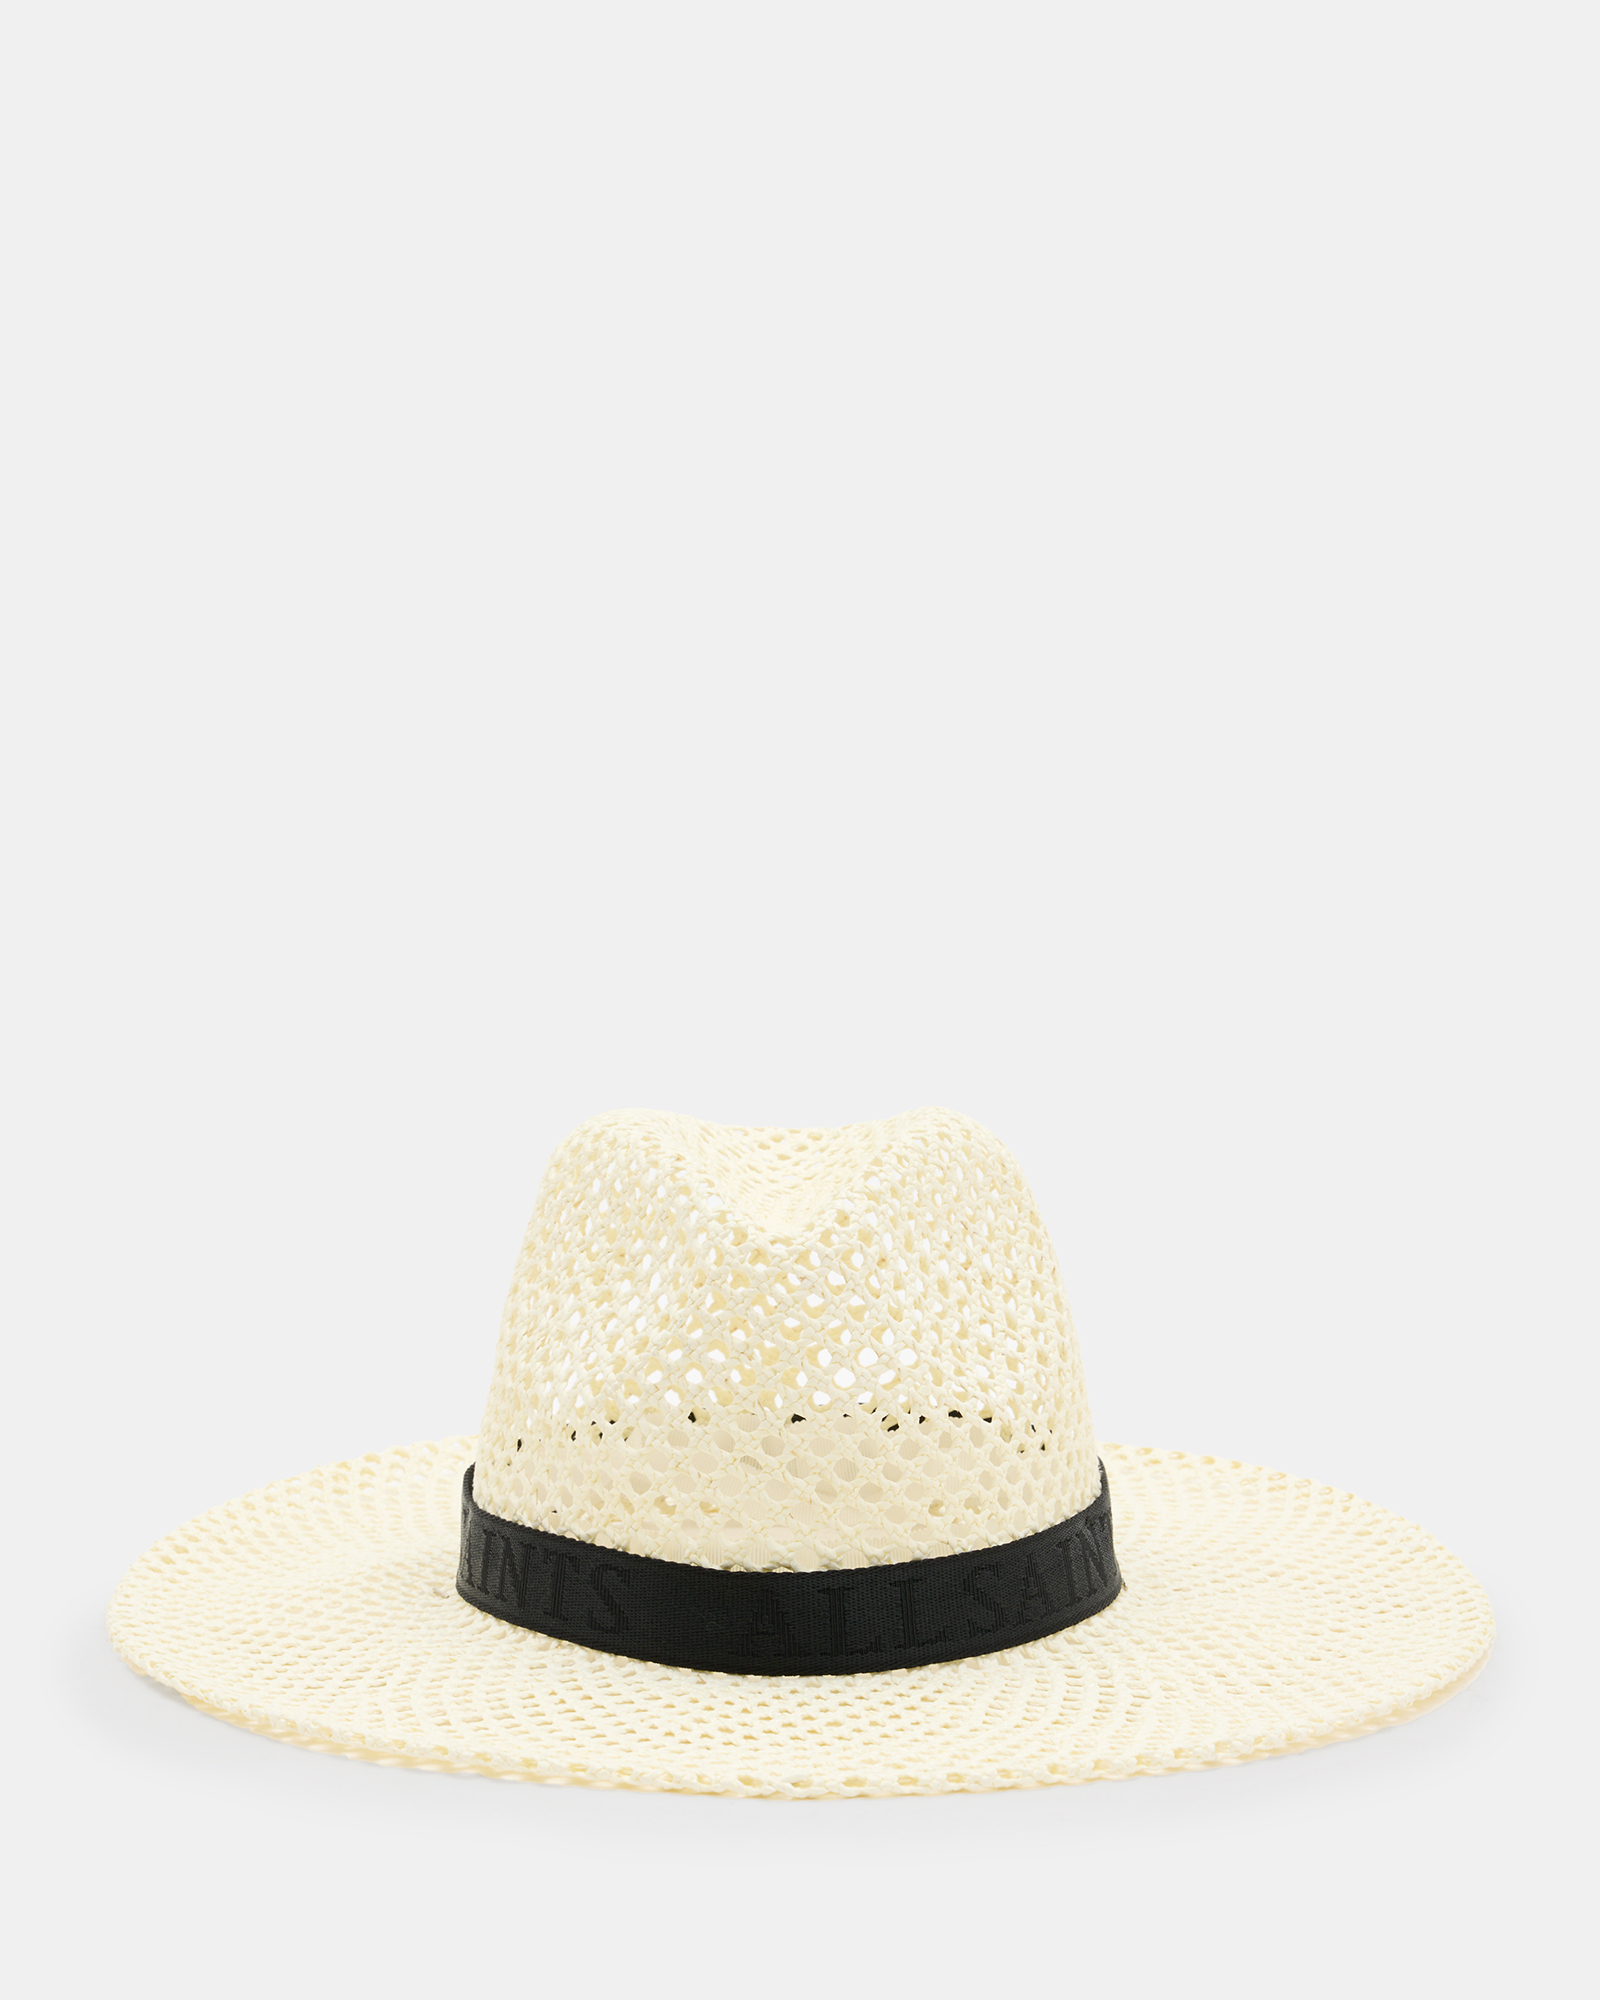 AllSaints Suvi Straw Fedora Hat